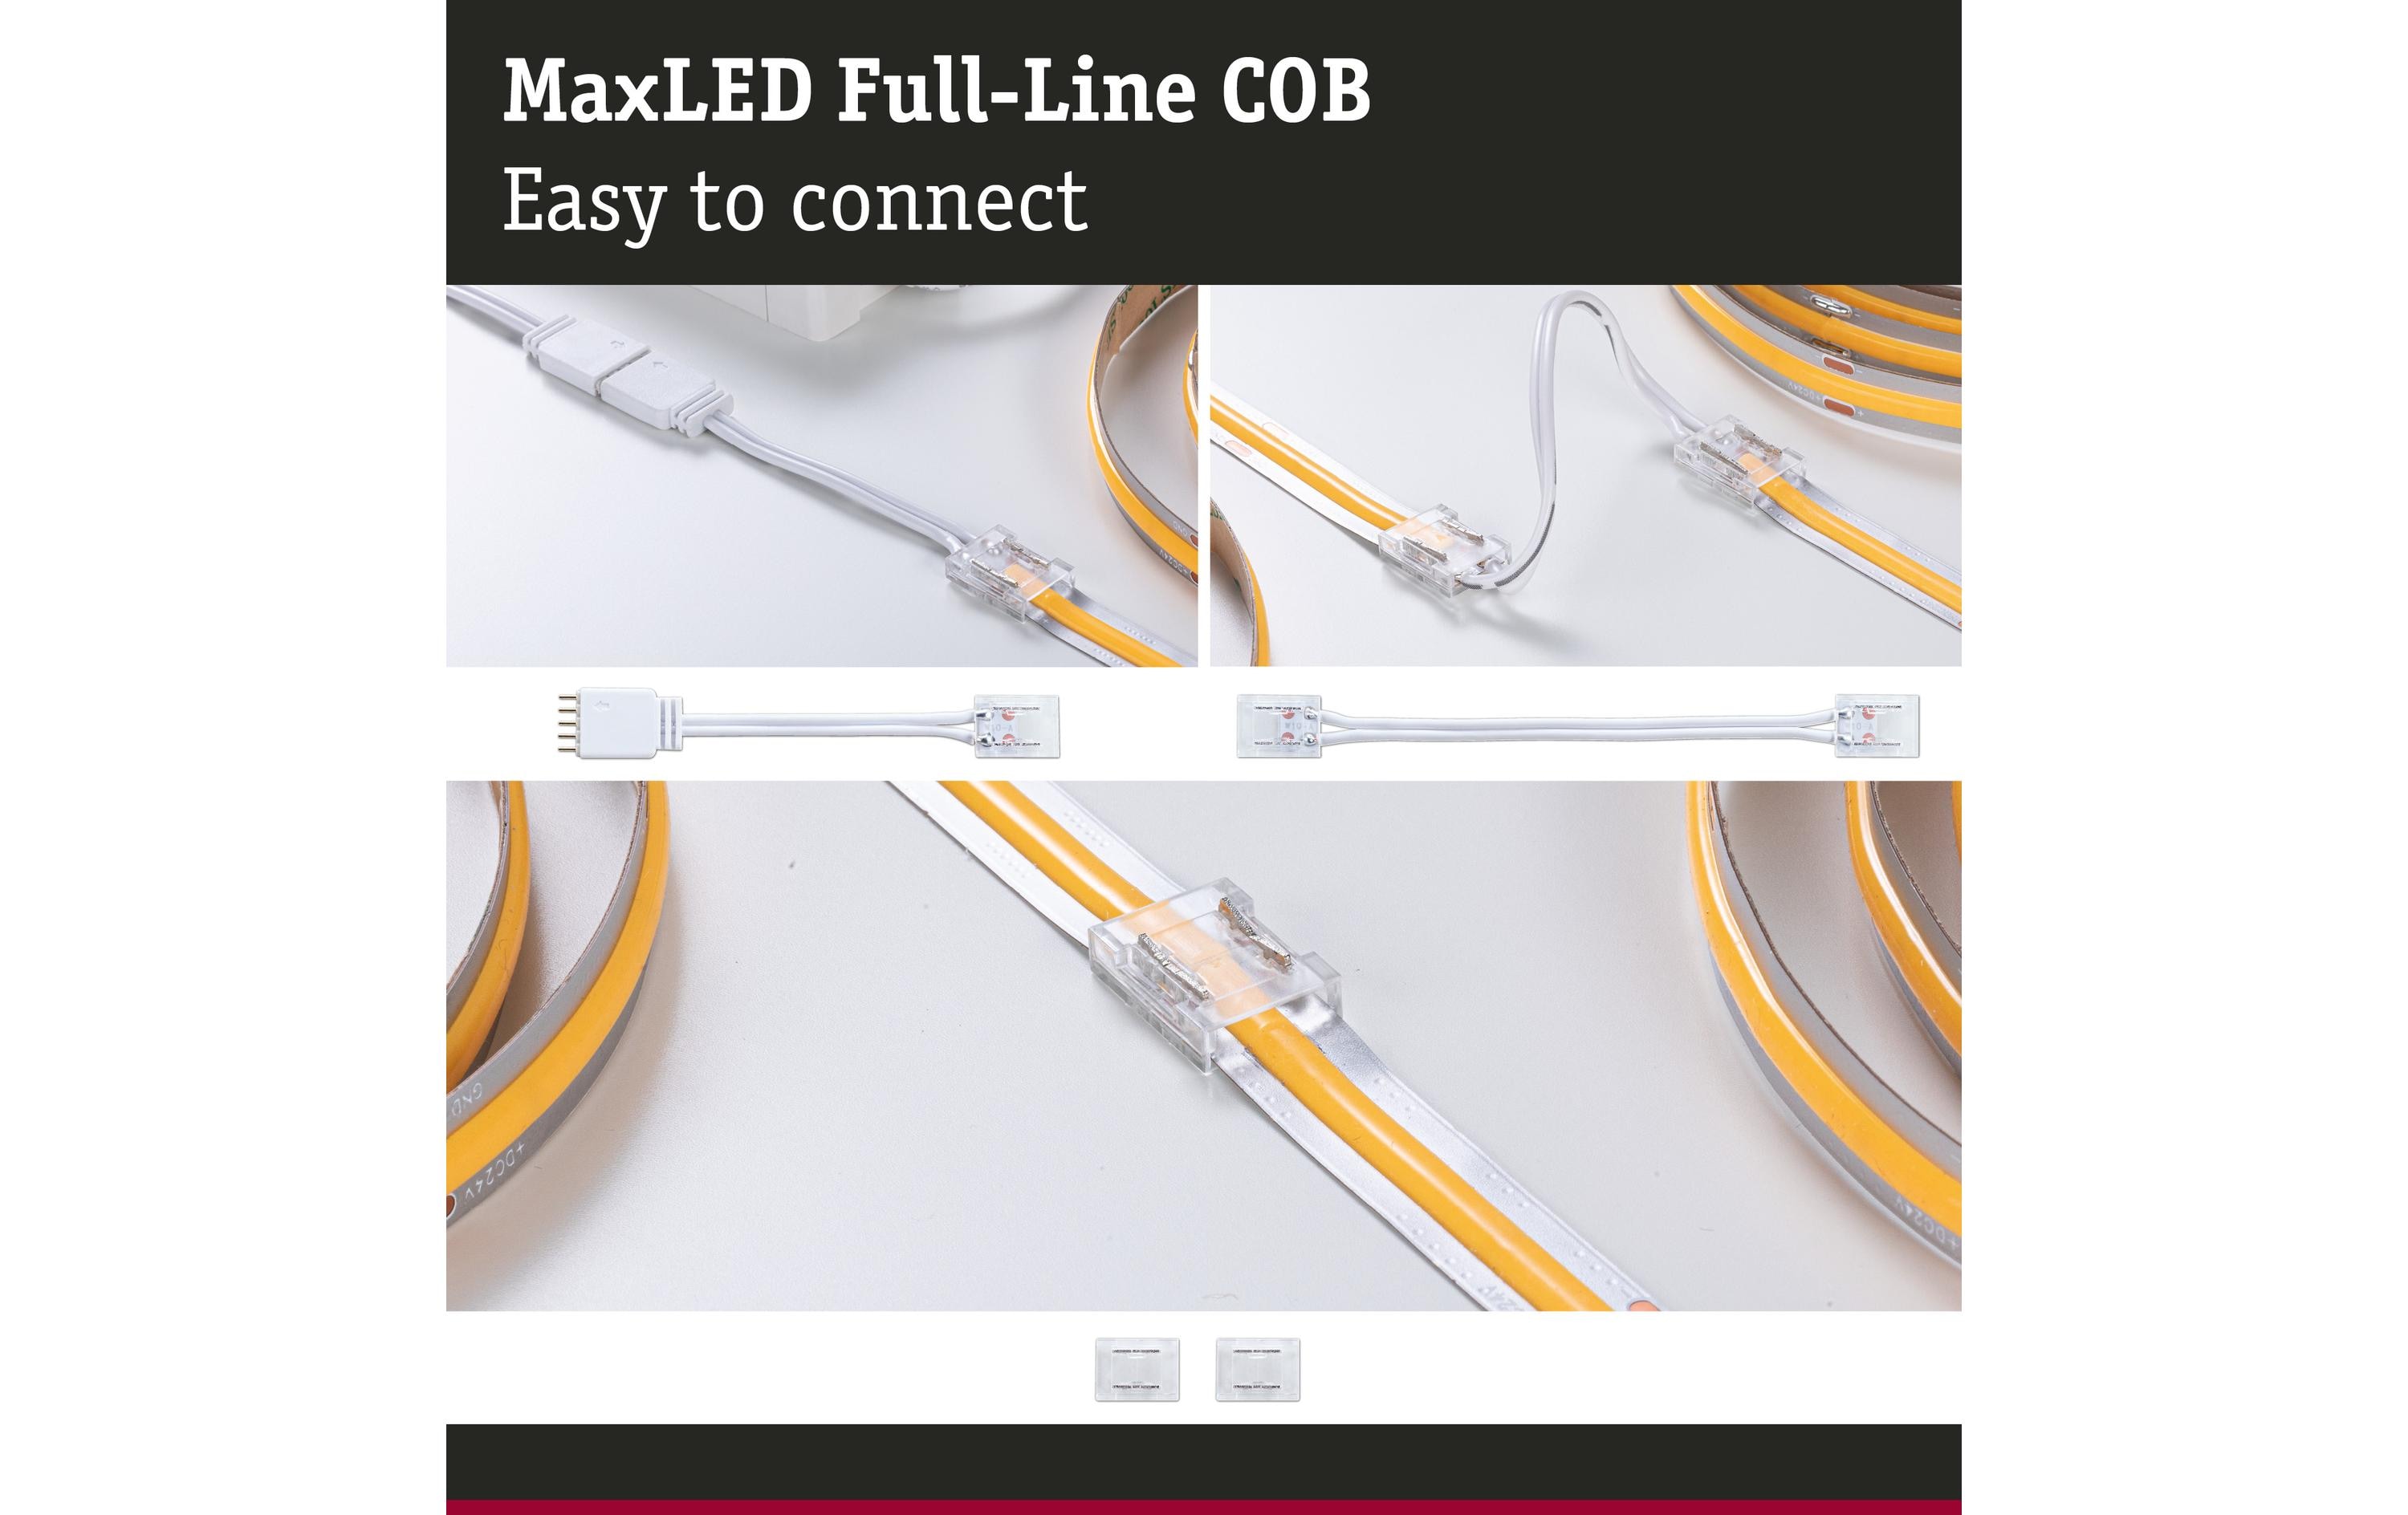 Paulmann Verbindungskabel MaxLED Full-Line COB Connector Set